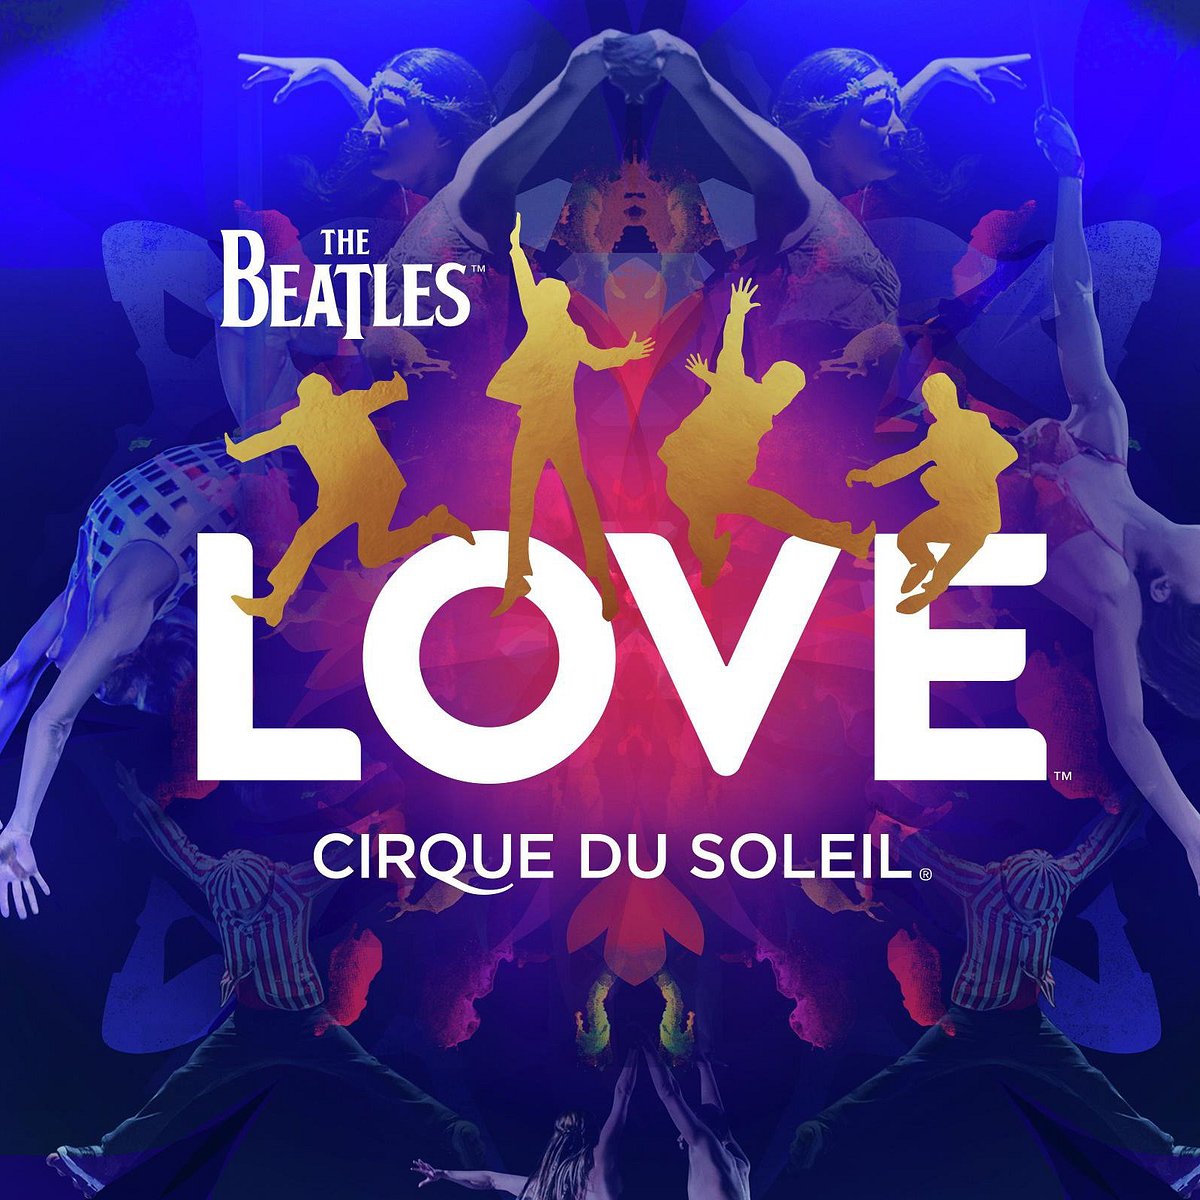 The Beatles Love Cirque du Soleil (Las Vegas) 2022 All You Need